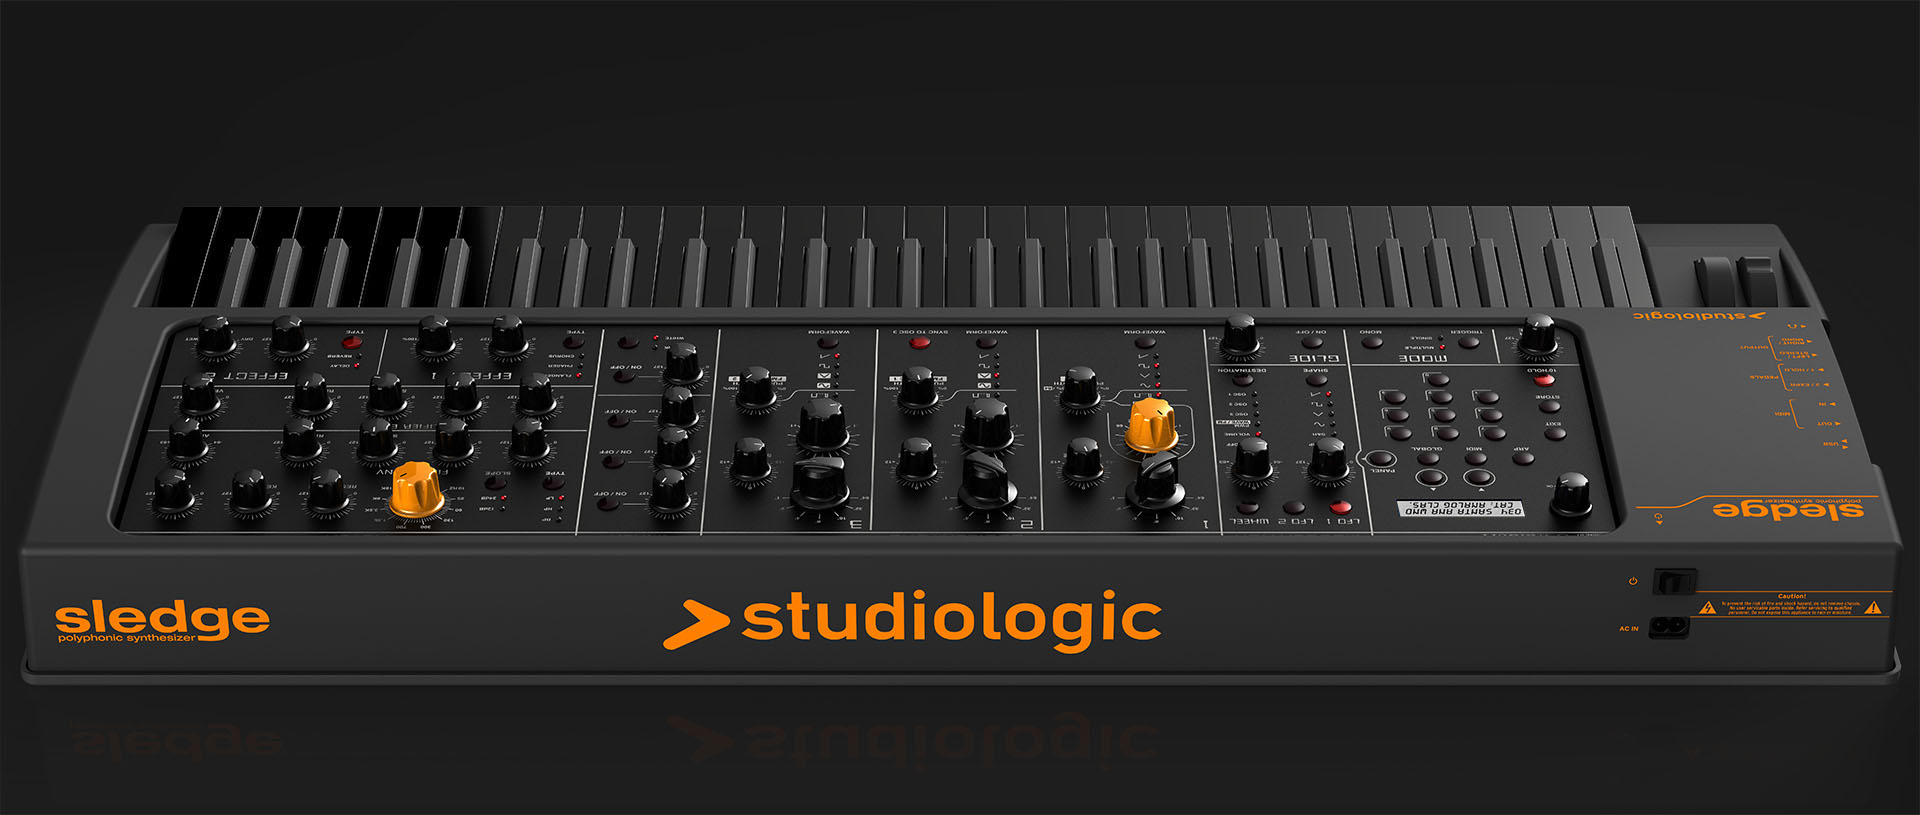 Studiologic Sledge Black Edition - Sintetizador - Variation 1